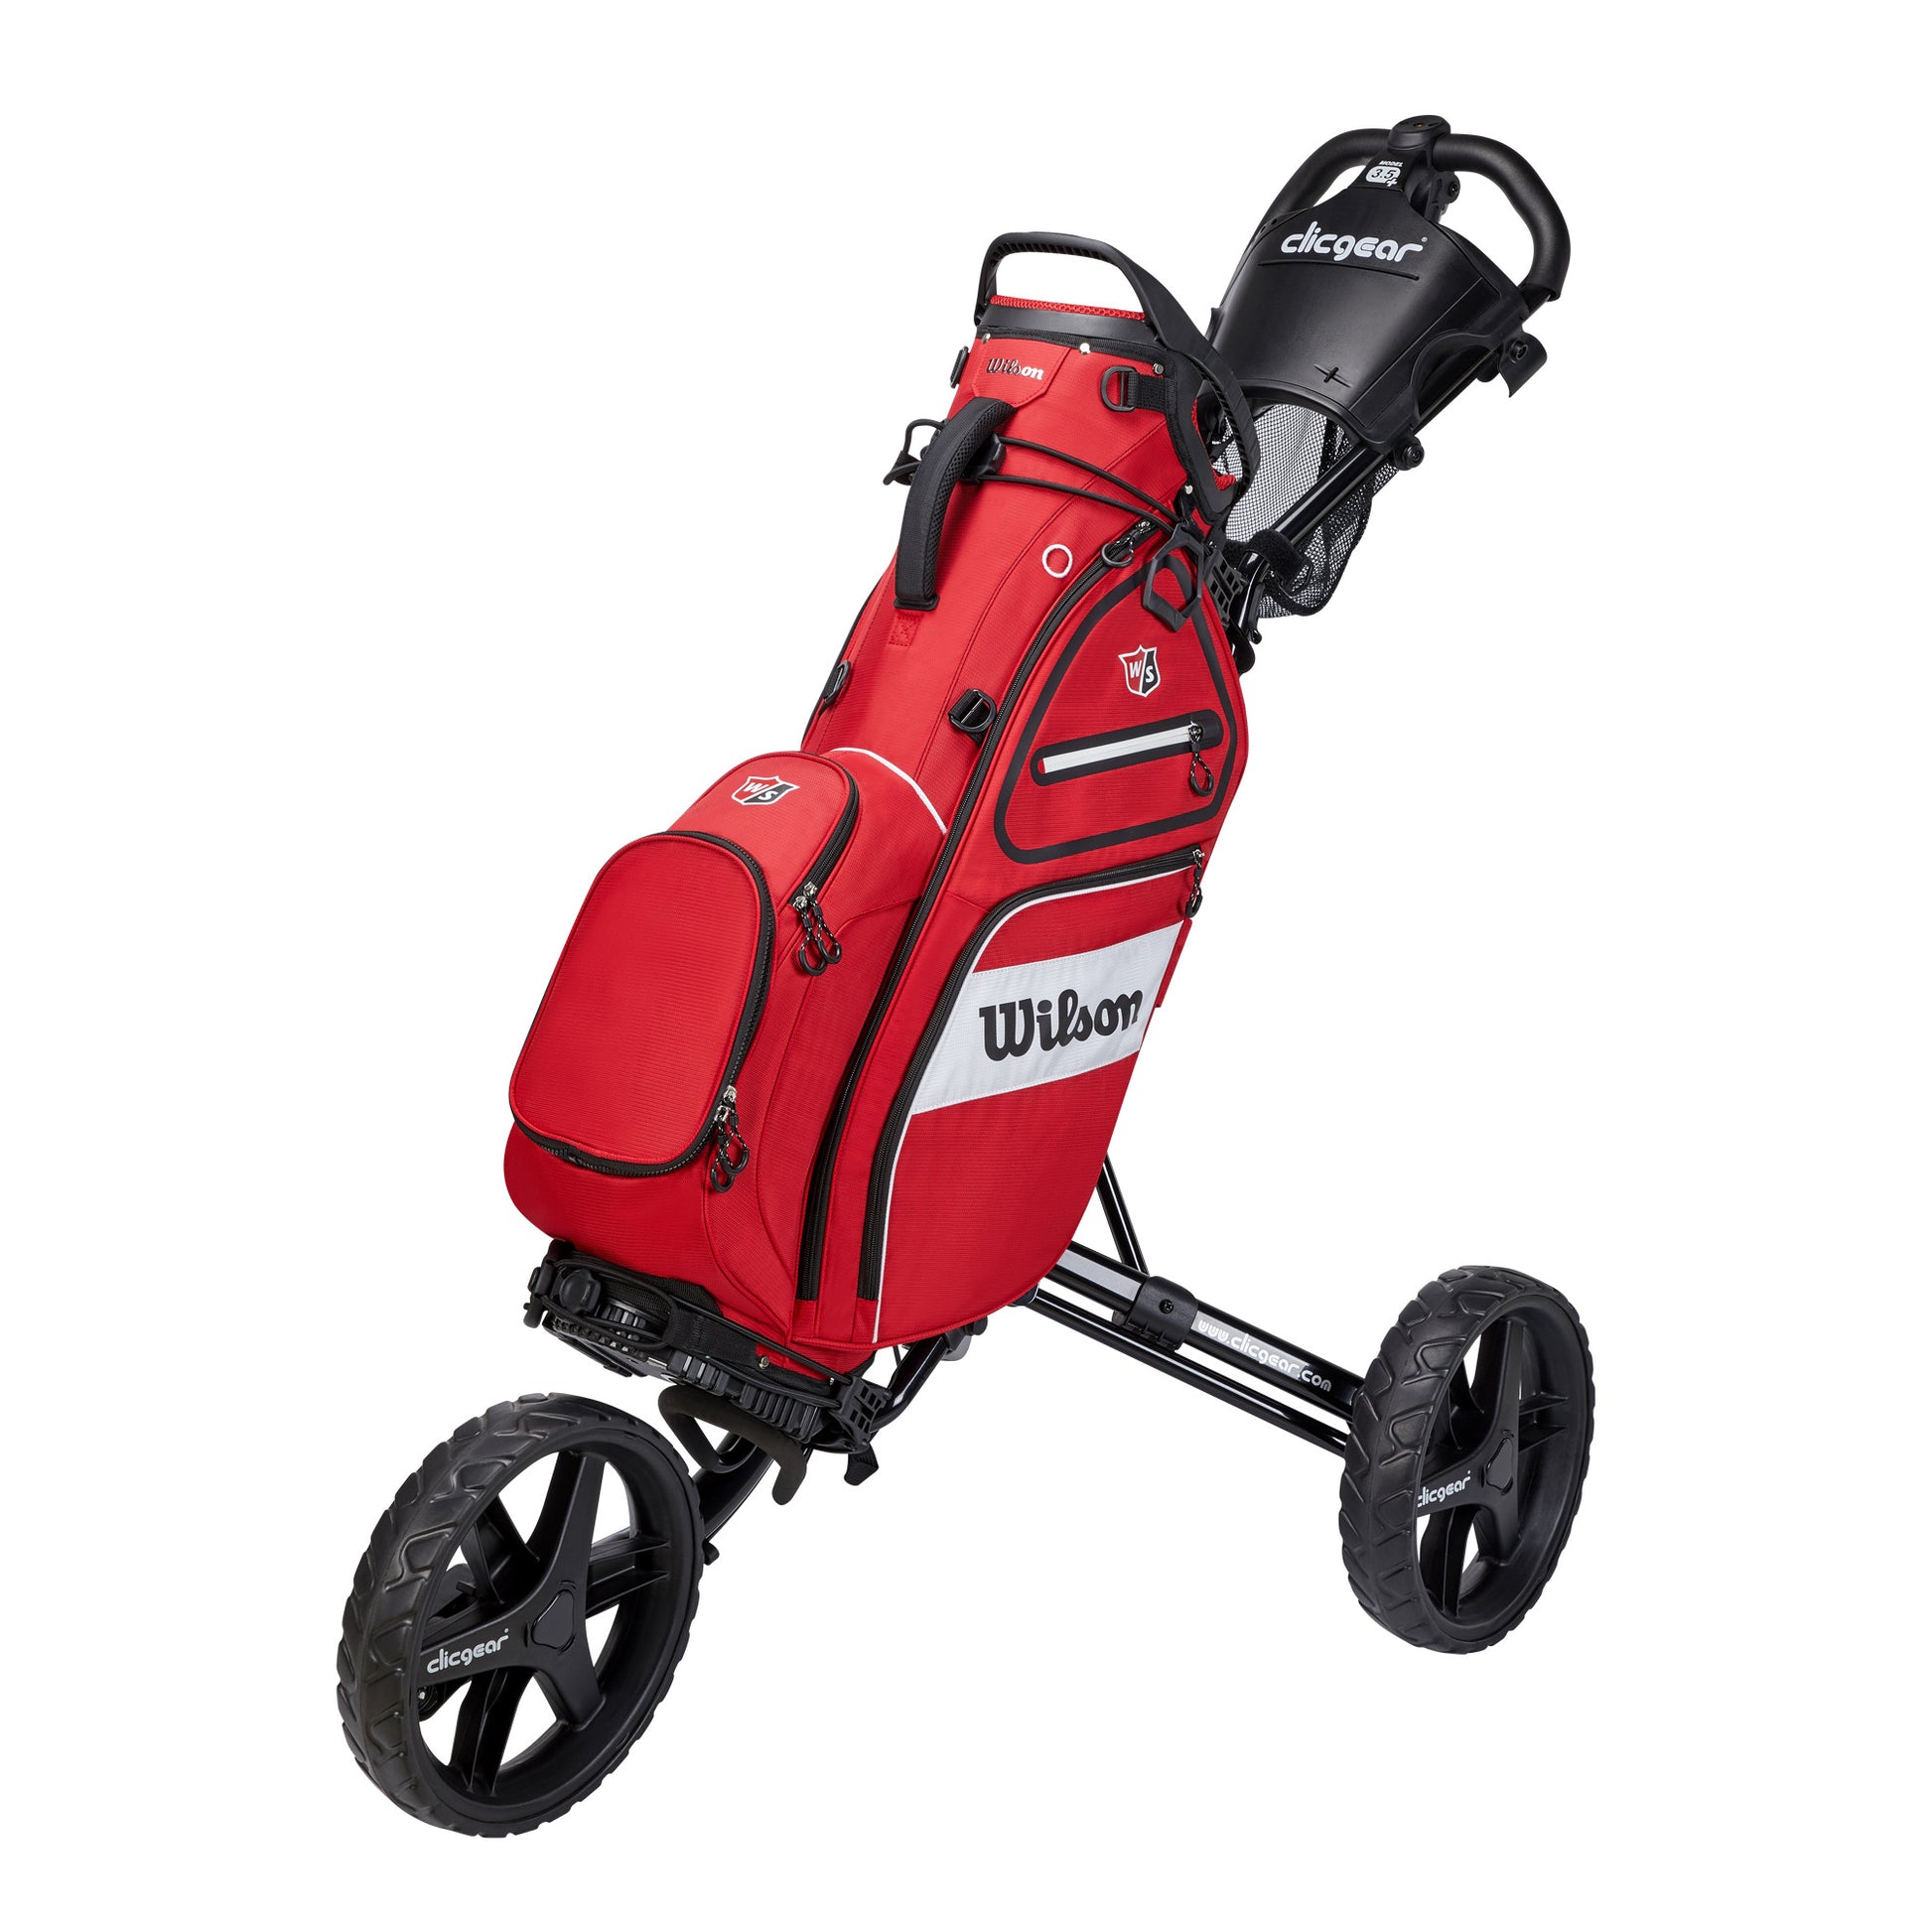 Wilson Staff Exo II Golf Carry Bag, Red